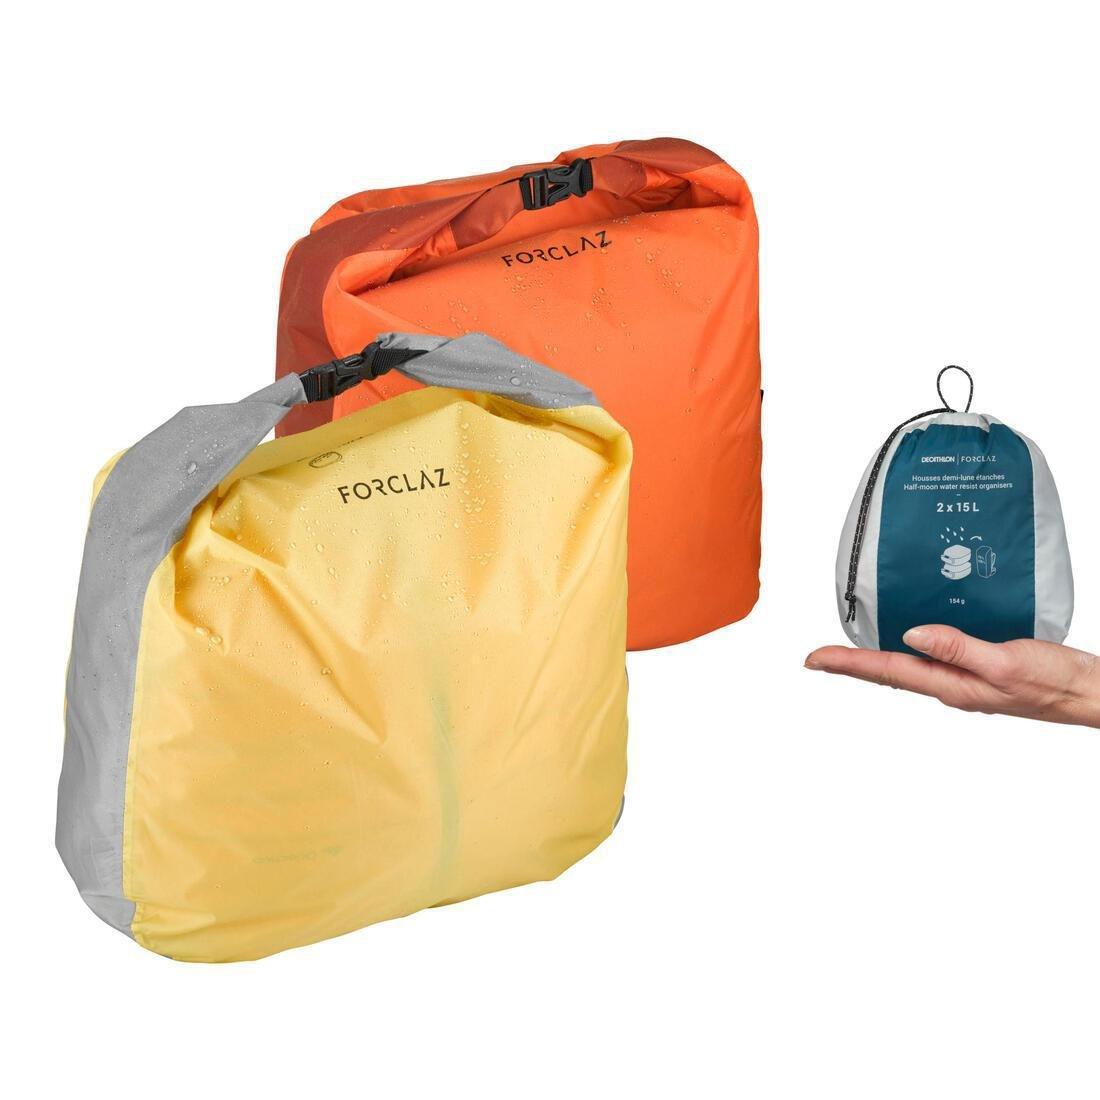 Forclaz 7 L Waterproof Half-Moon Hiking Storage Covers 2-Pack